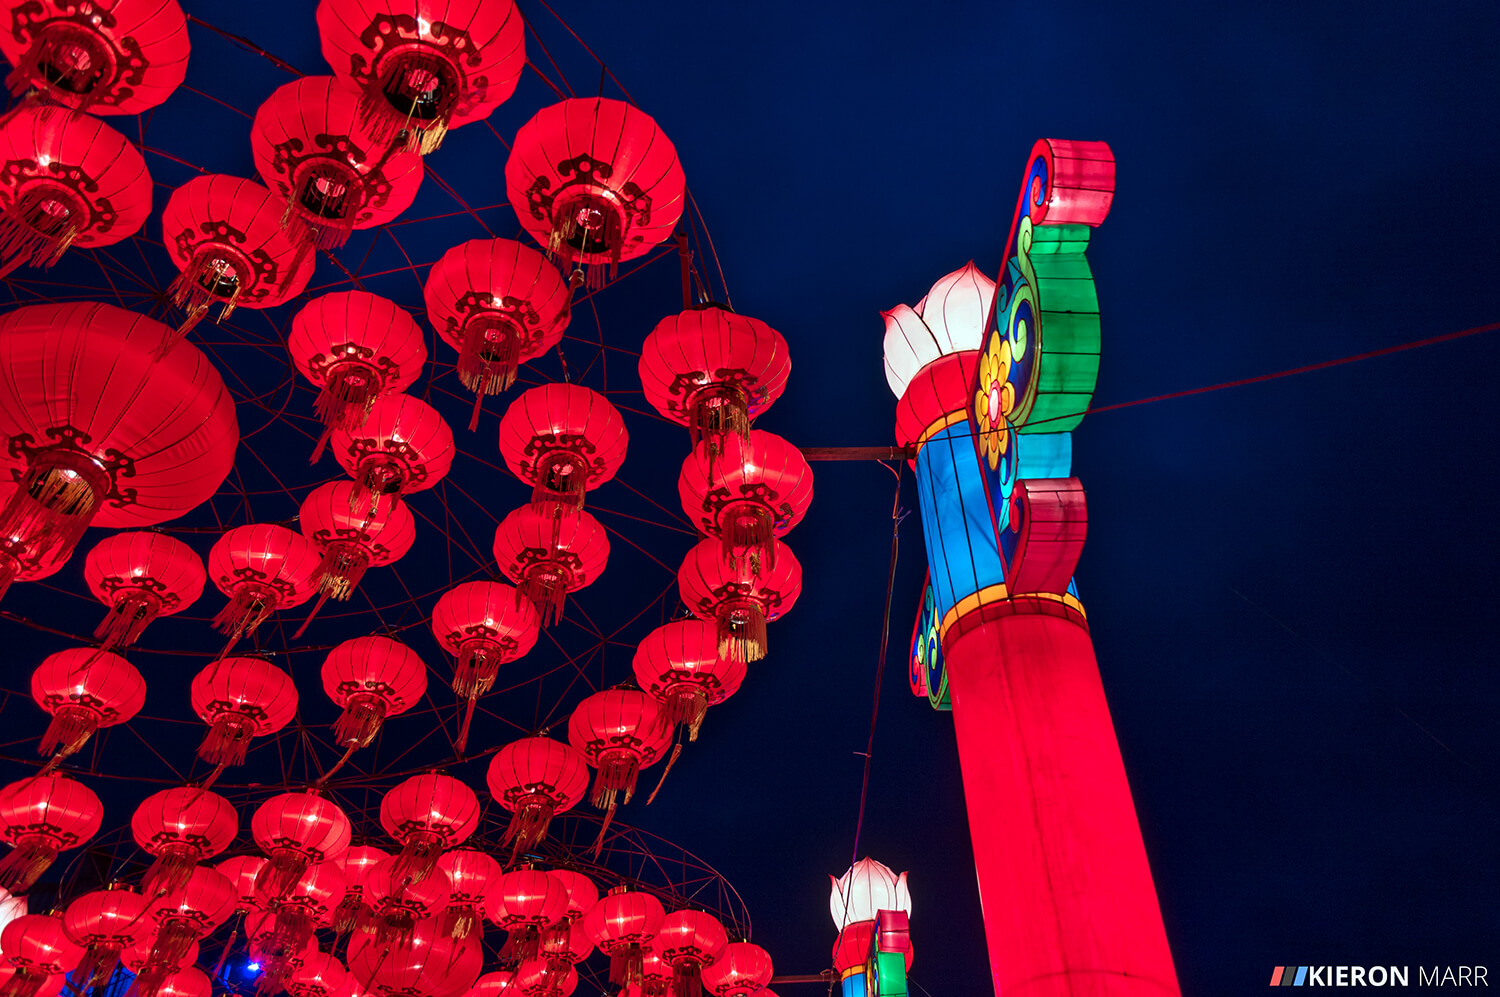 Longleat Festival of Light 2014 - Chinese Lanterns